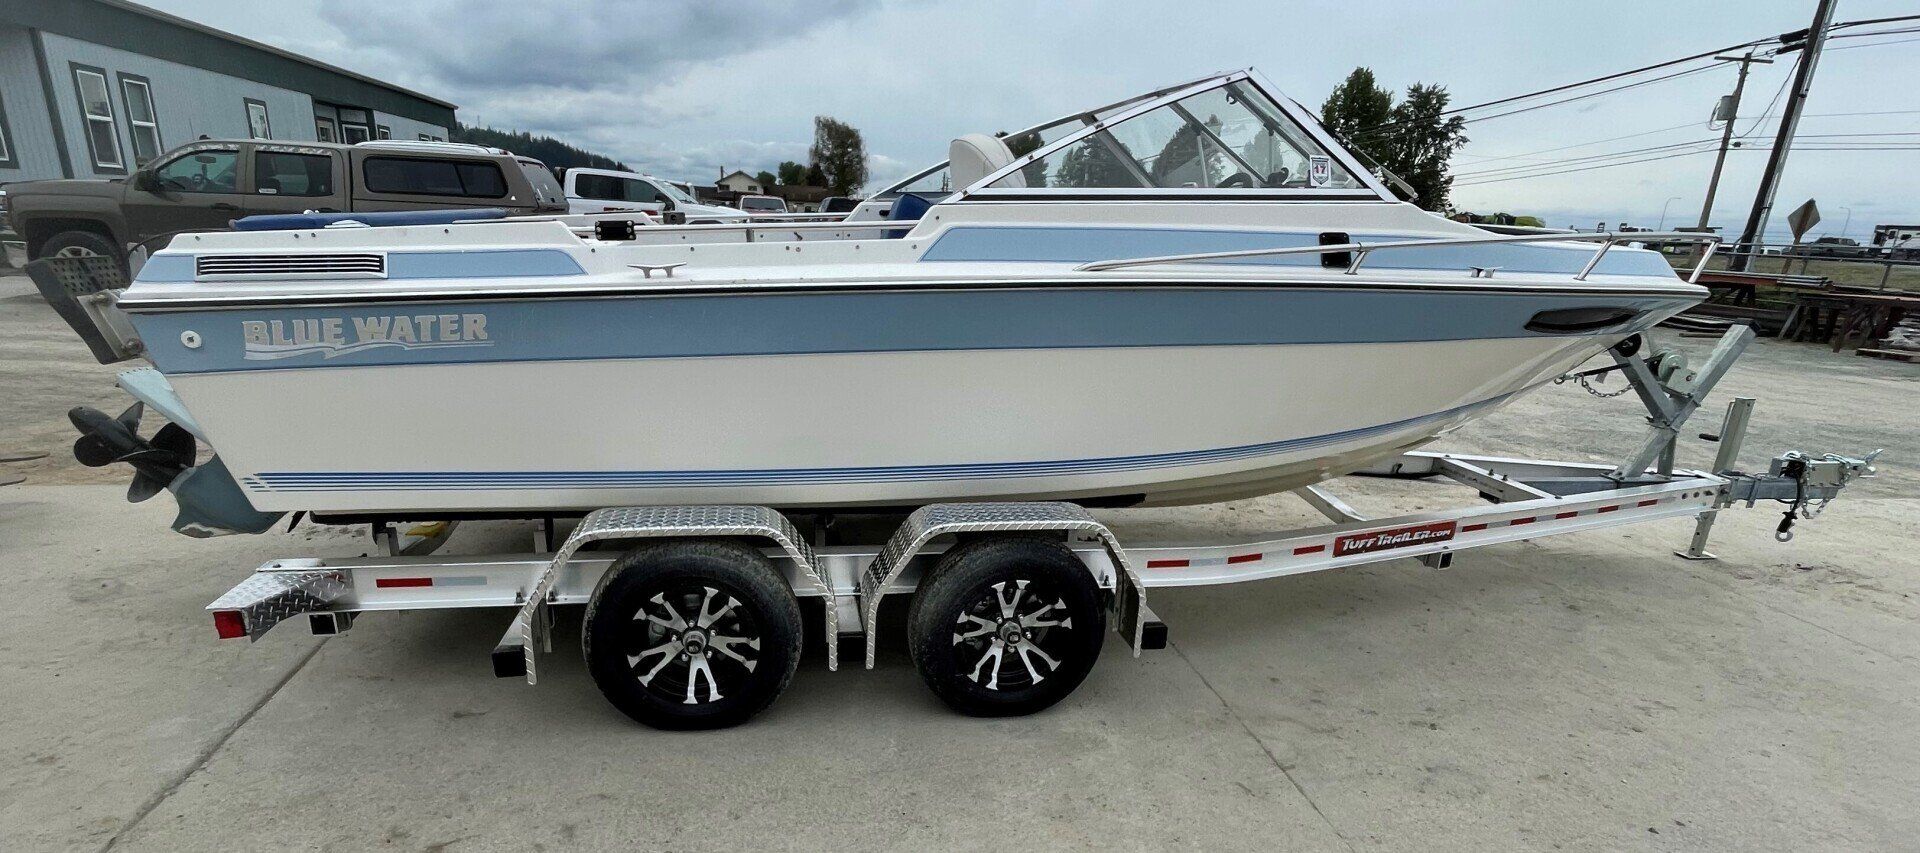 Tuff boat trailer